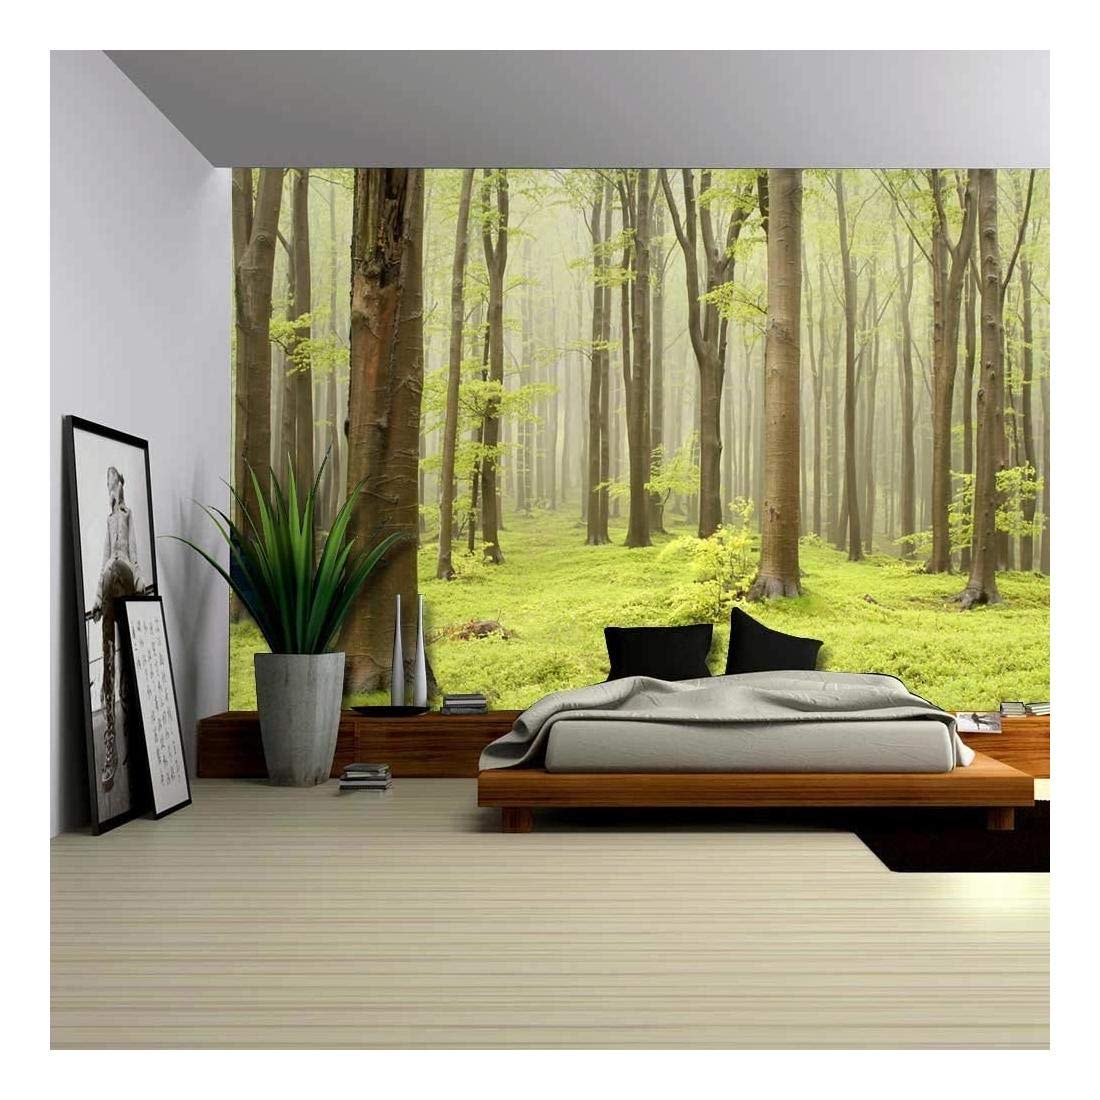 Обои на стену лес. Фотообои в спальню. Фотообои лес в спальне. Фотообои лес в интерьере спальни. Комната с фотообоями лес.